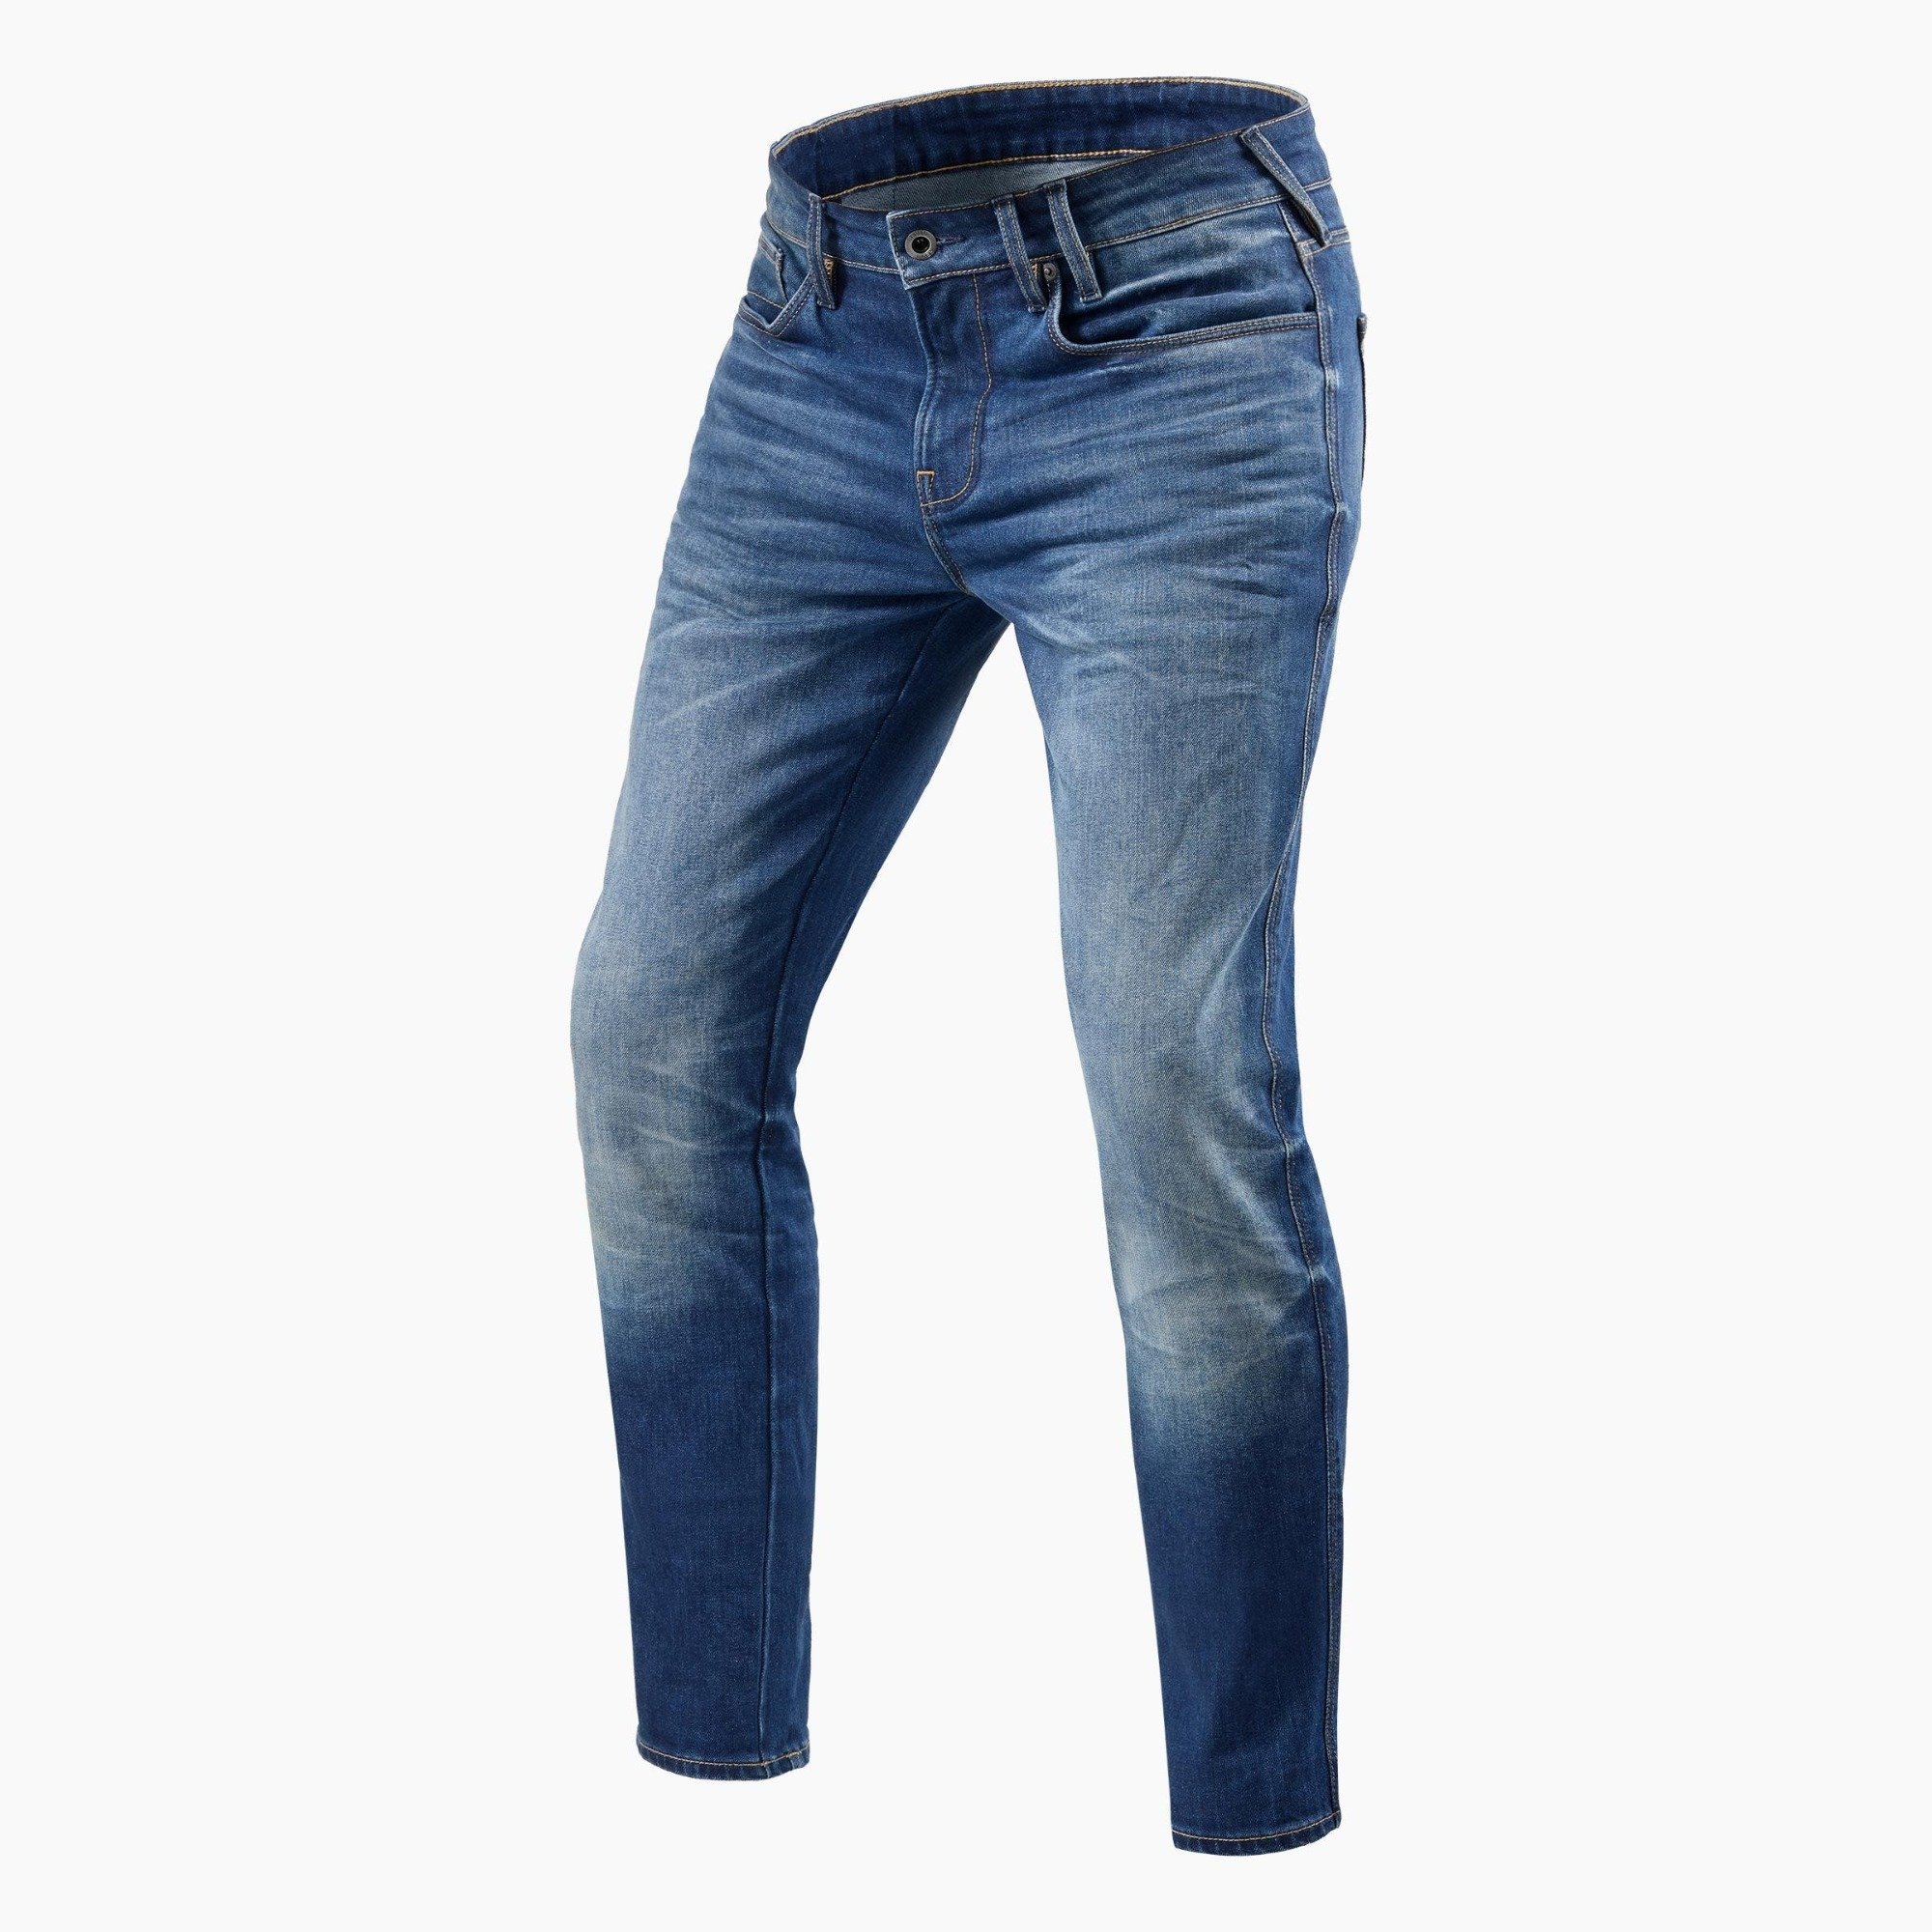 Image of REV'IT! Jeans Carlin SK Mid Blue Used Motorcycle Jeans Size L32/W30 EN